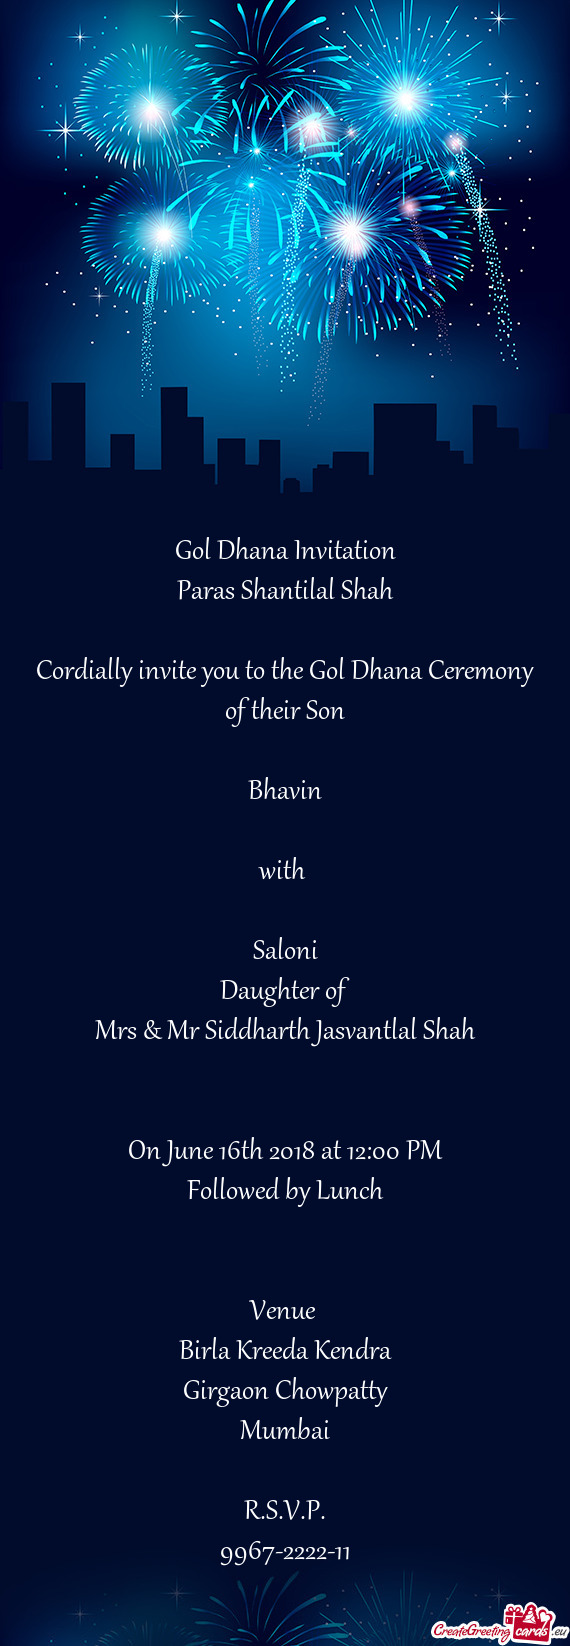 R Son
 
 Bhavin
 
 with 
 
 Saloni
 Daughter of 
 Mrs & Mr Siddharth Jasvantlal Shah
 
 
 On June 16